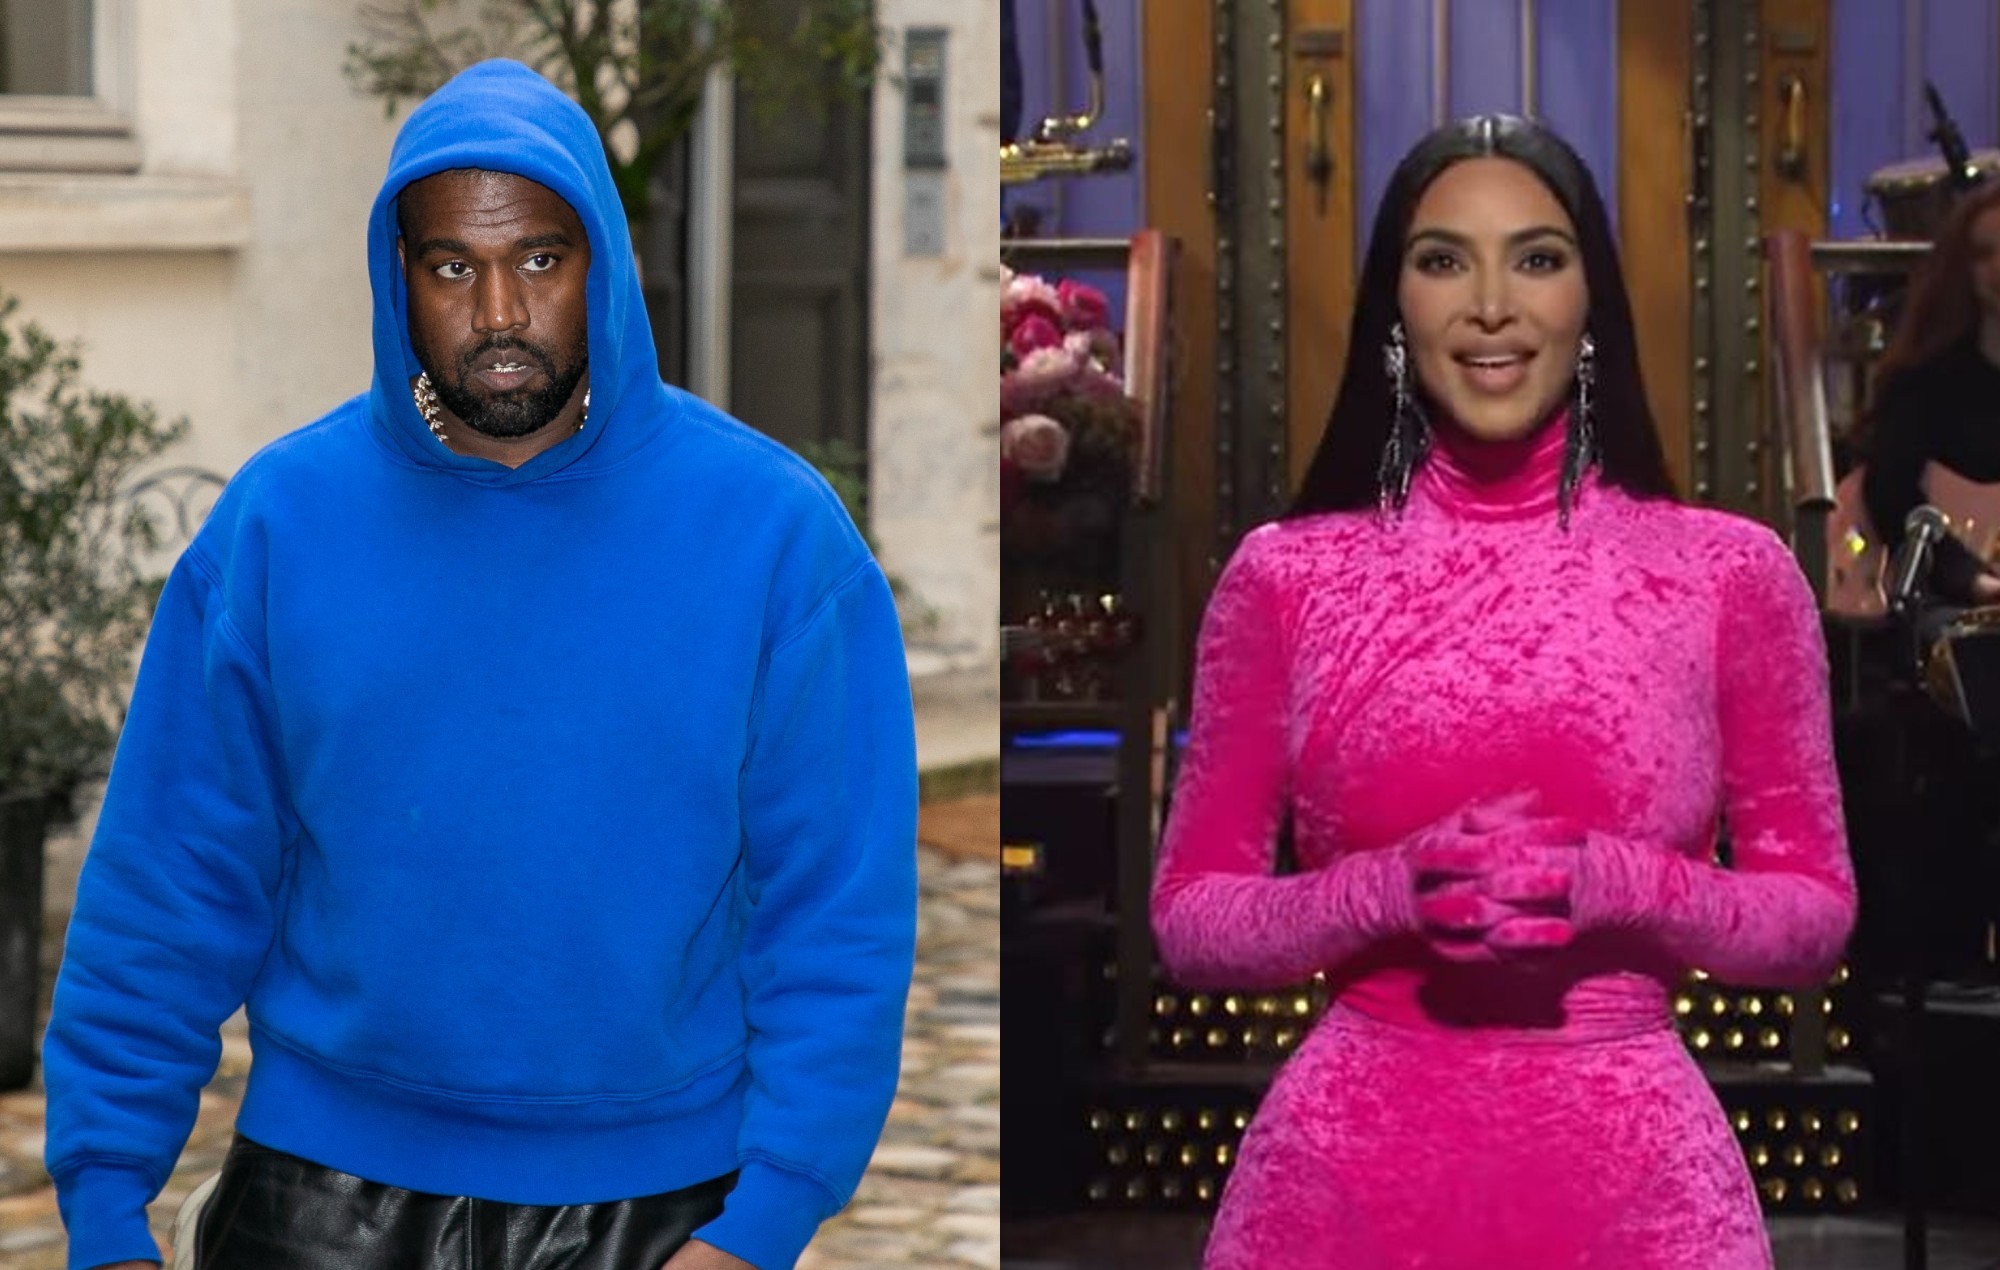 Kanye West abandonó el monólogo de Kim Kardashian en 'SNL' después de que le llamara "rapero"